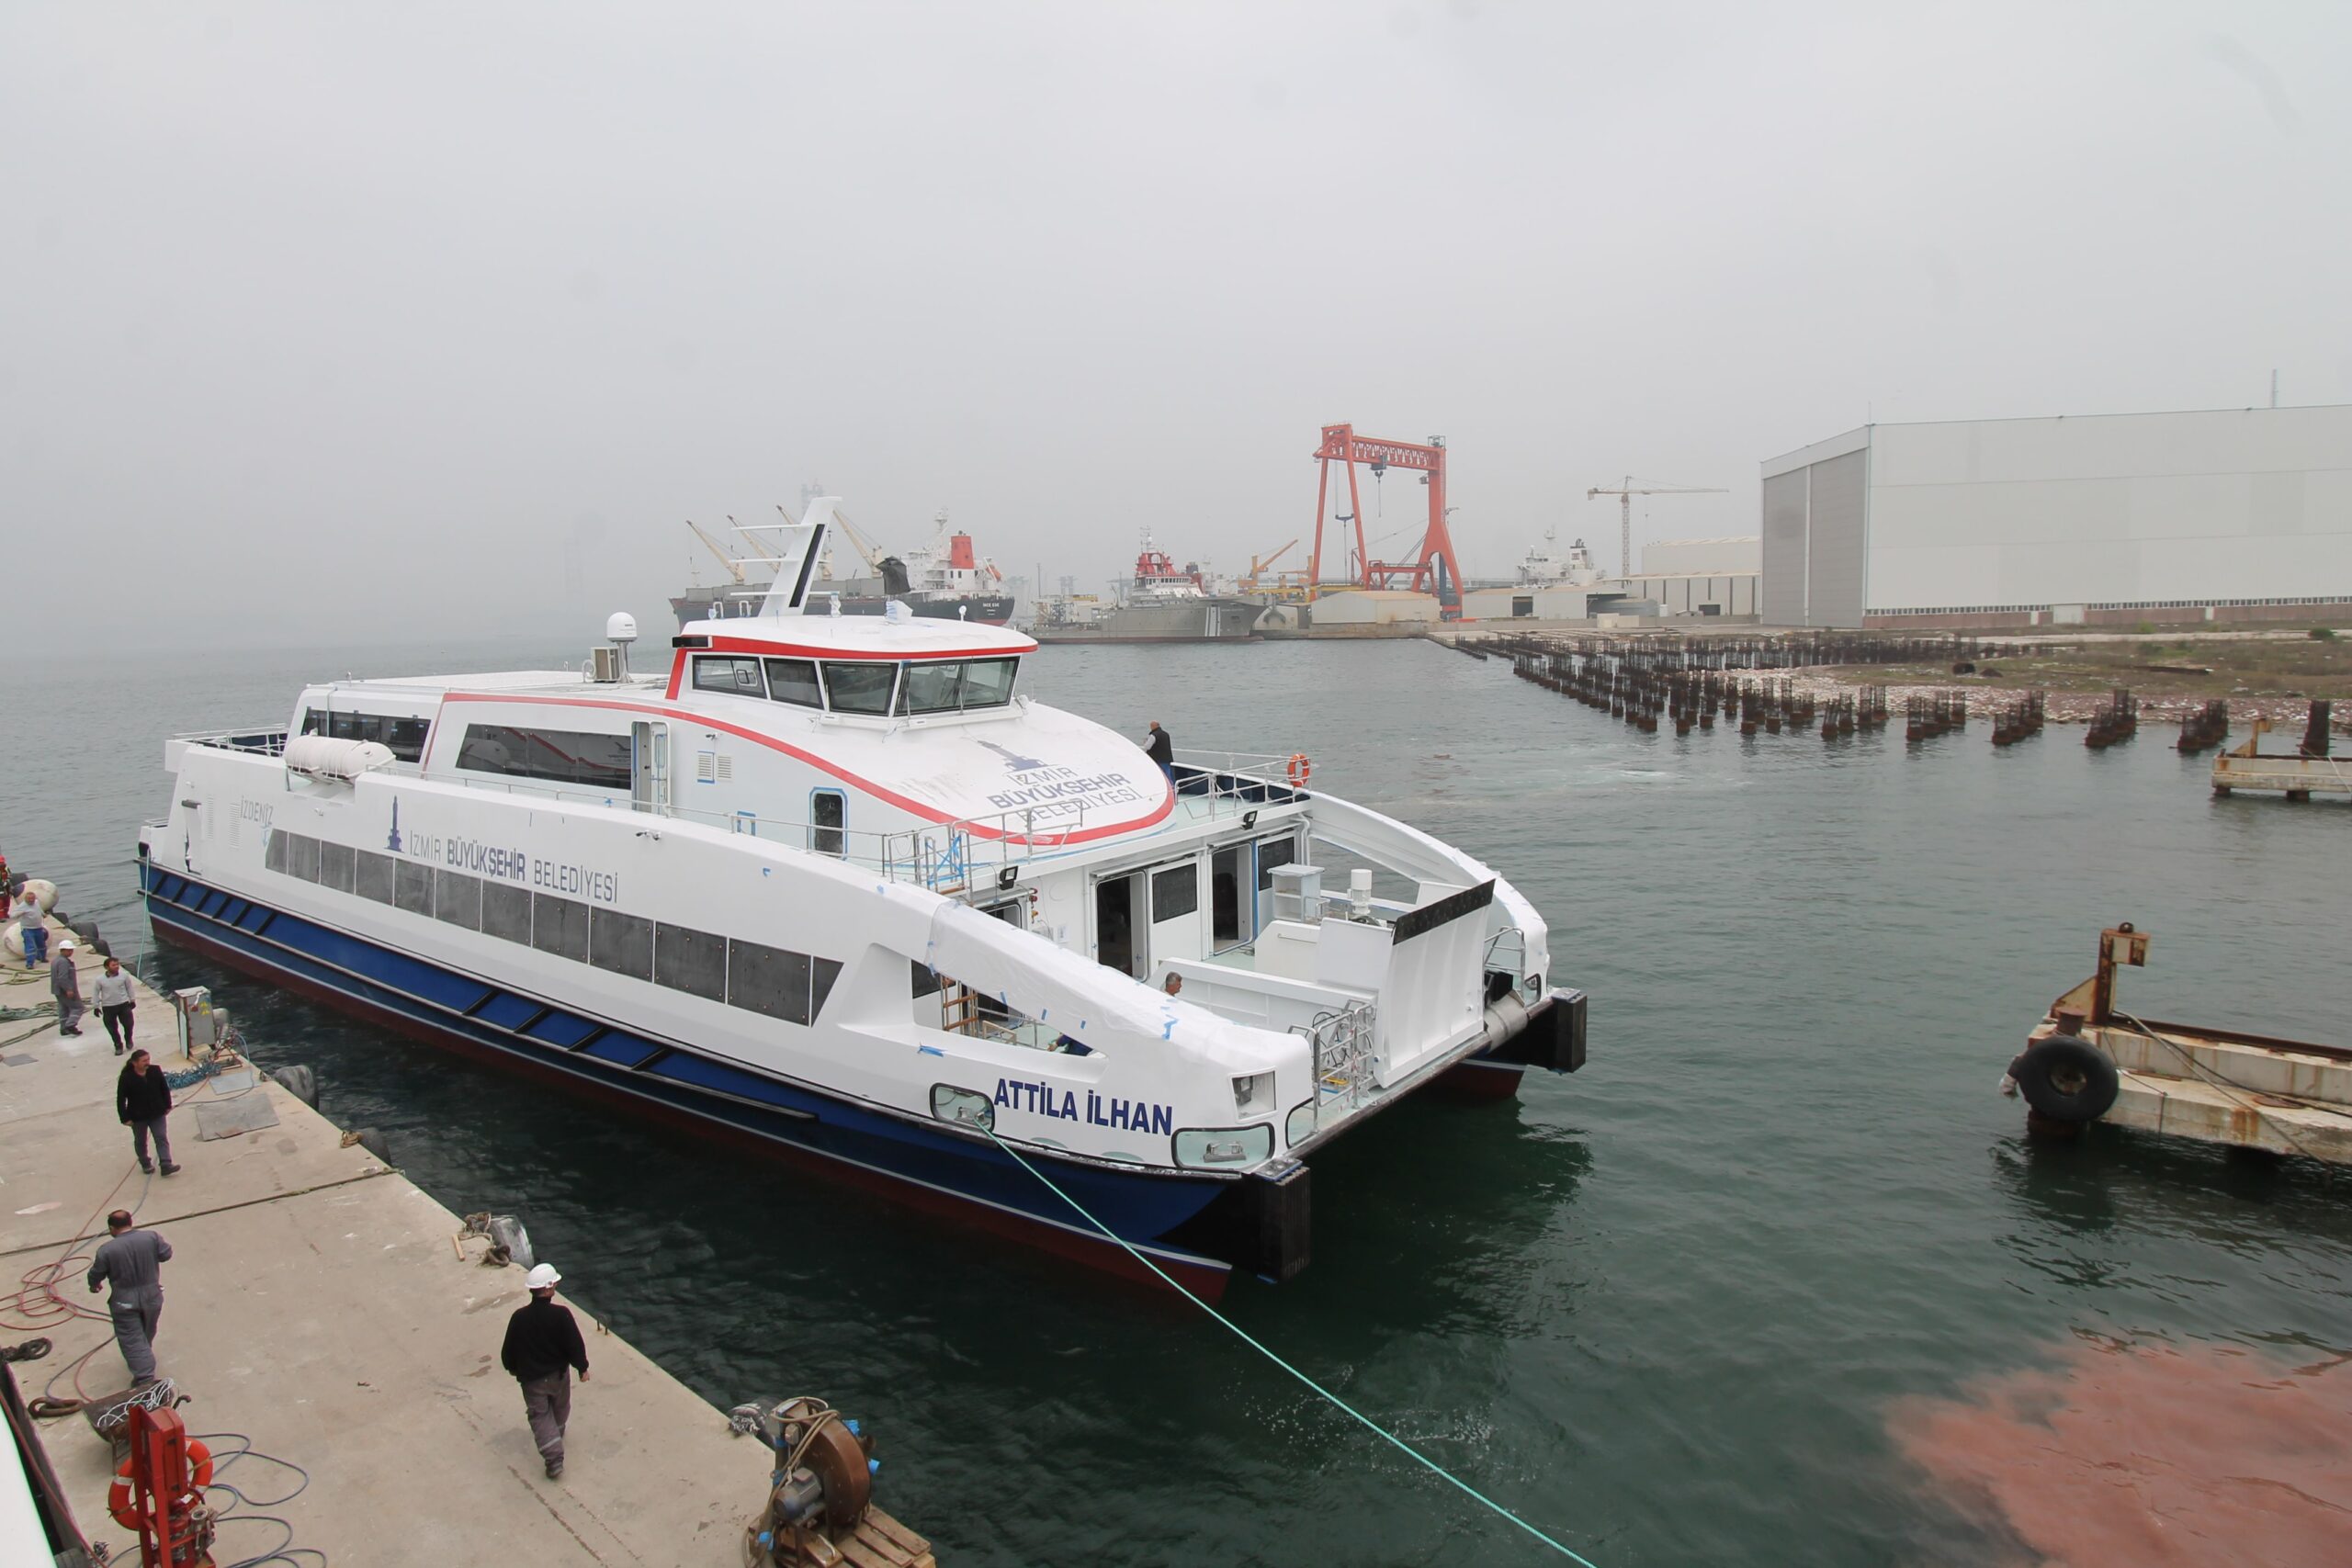 Özata Shipyard Build | ‘Attila İlhan’ Passenger Vessel Built by Özata Shipyard Arrived to Izmir